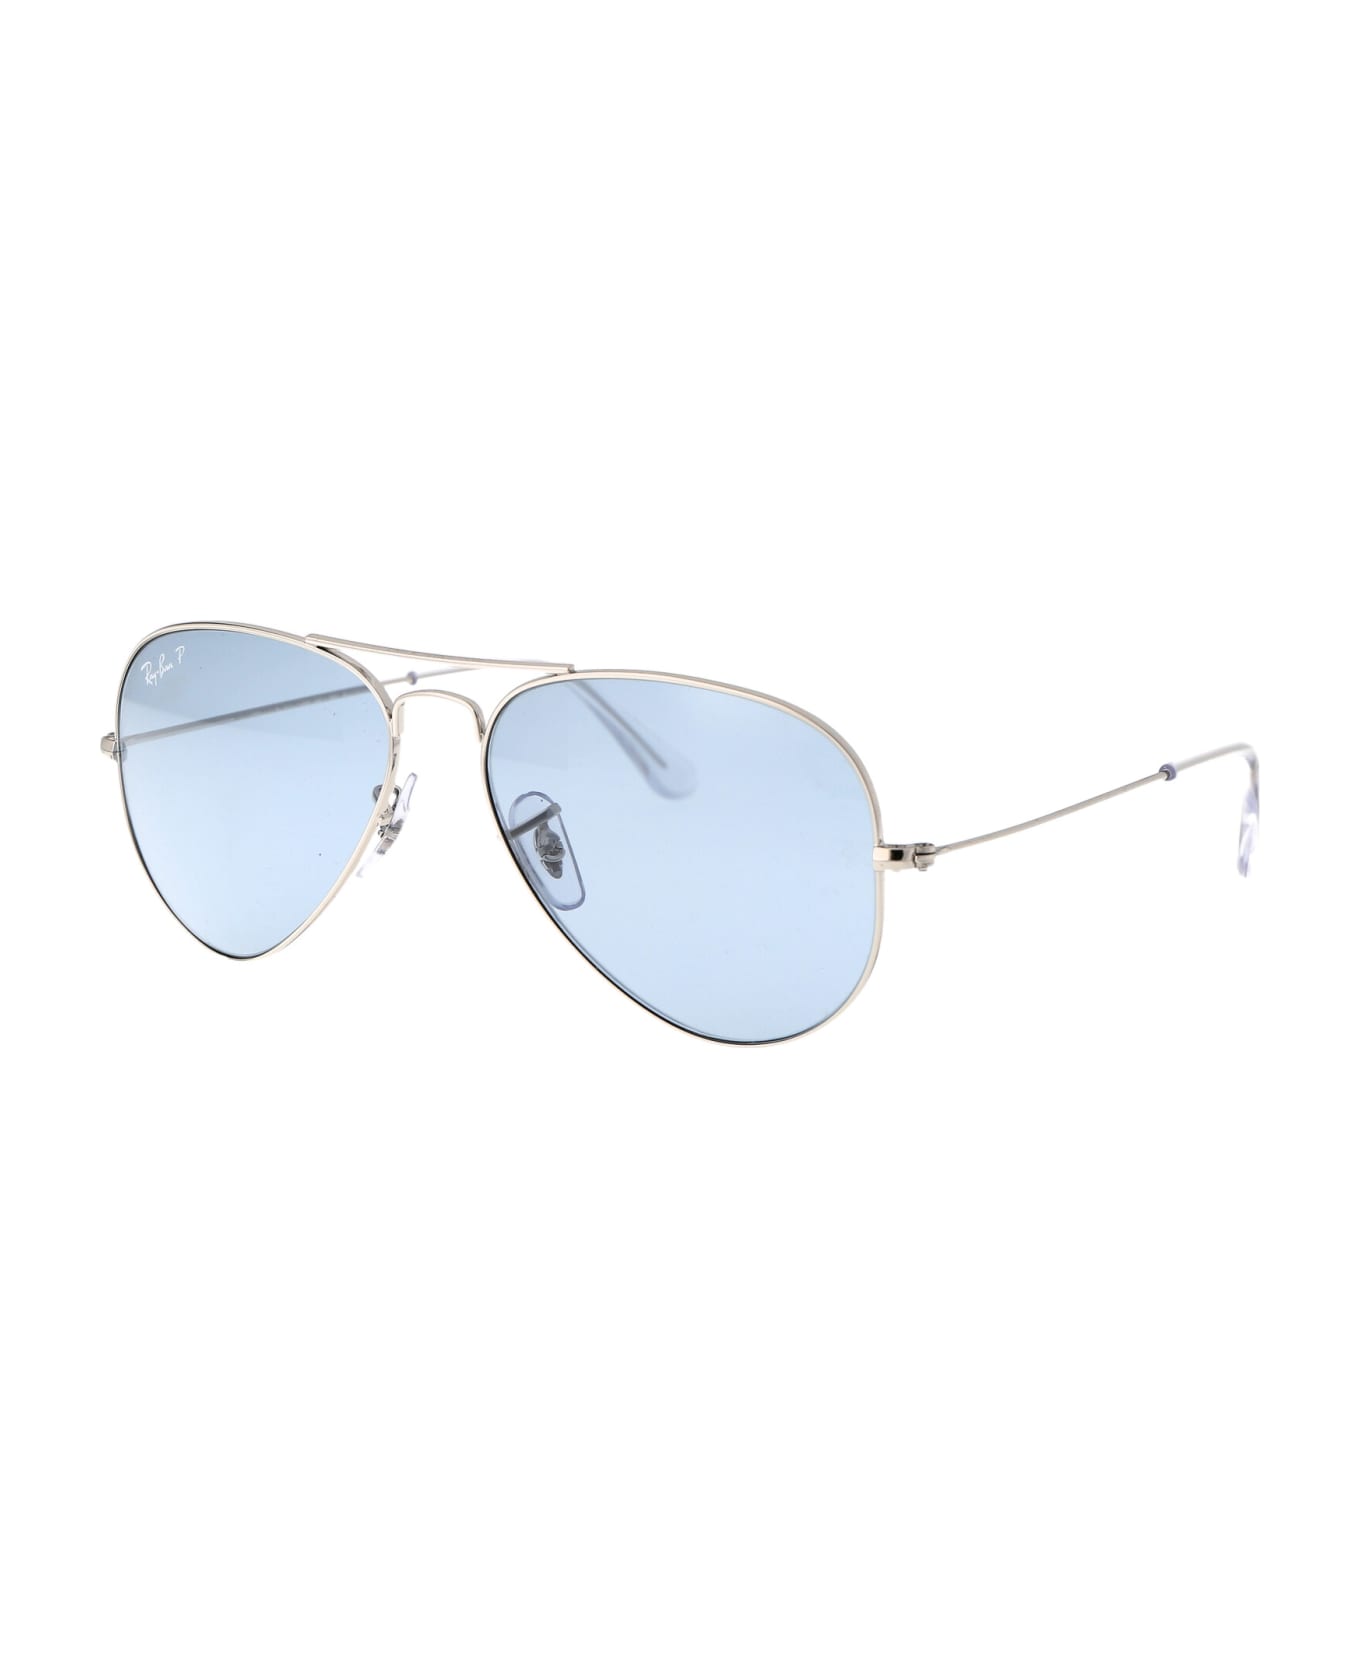 Ray-Ban Aviator Sunglasses - 003/02 Silver サングラス